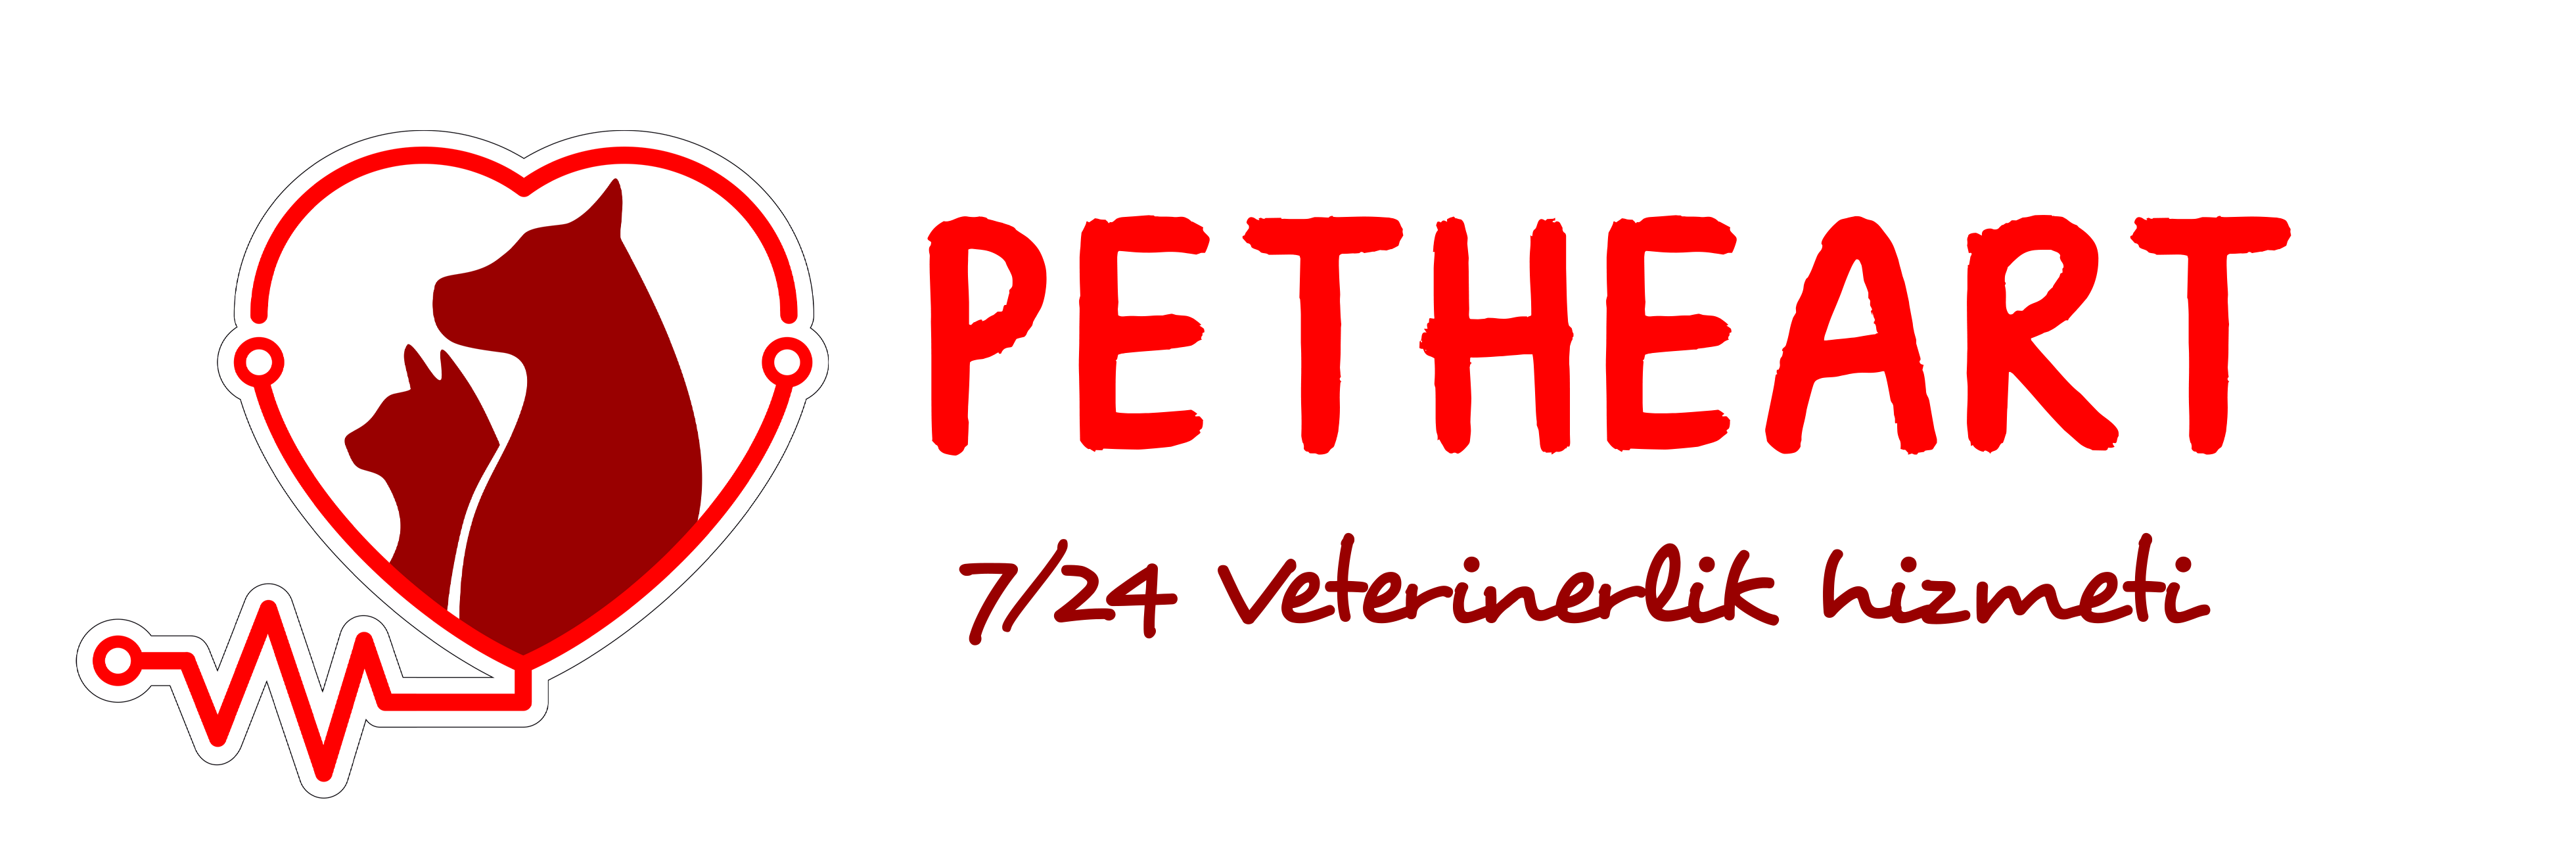 Petheart 7/24 Acil Veteriner